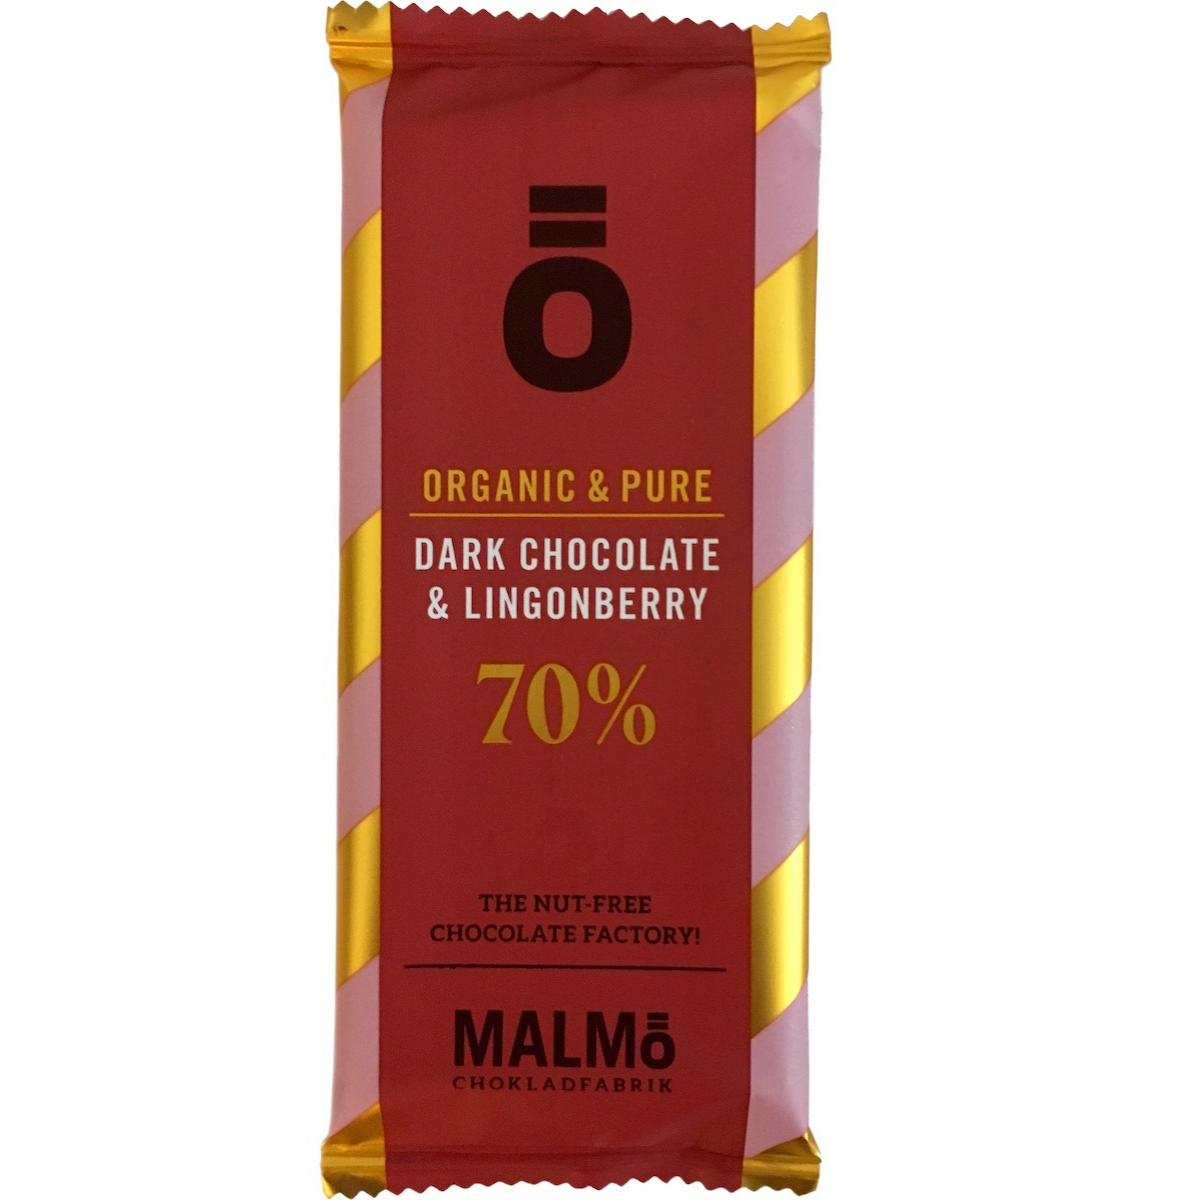 Organic chocolate from Malmö chokladfabrik